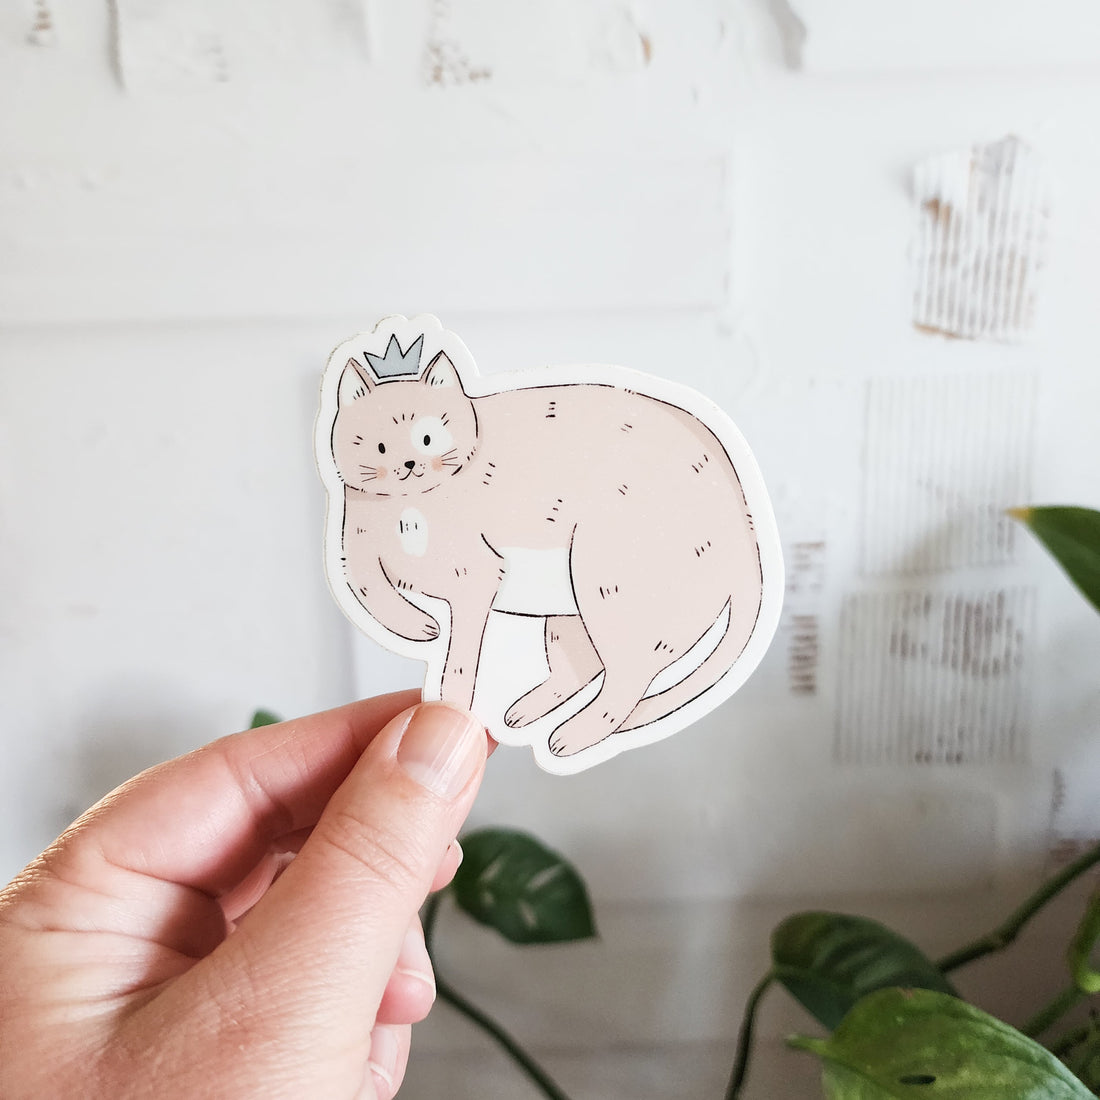 pink cat sticker held in hand